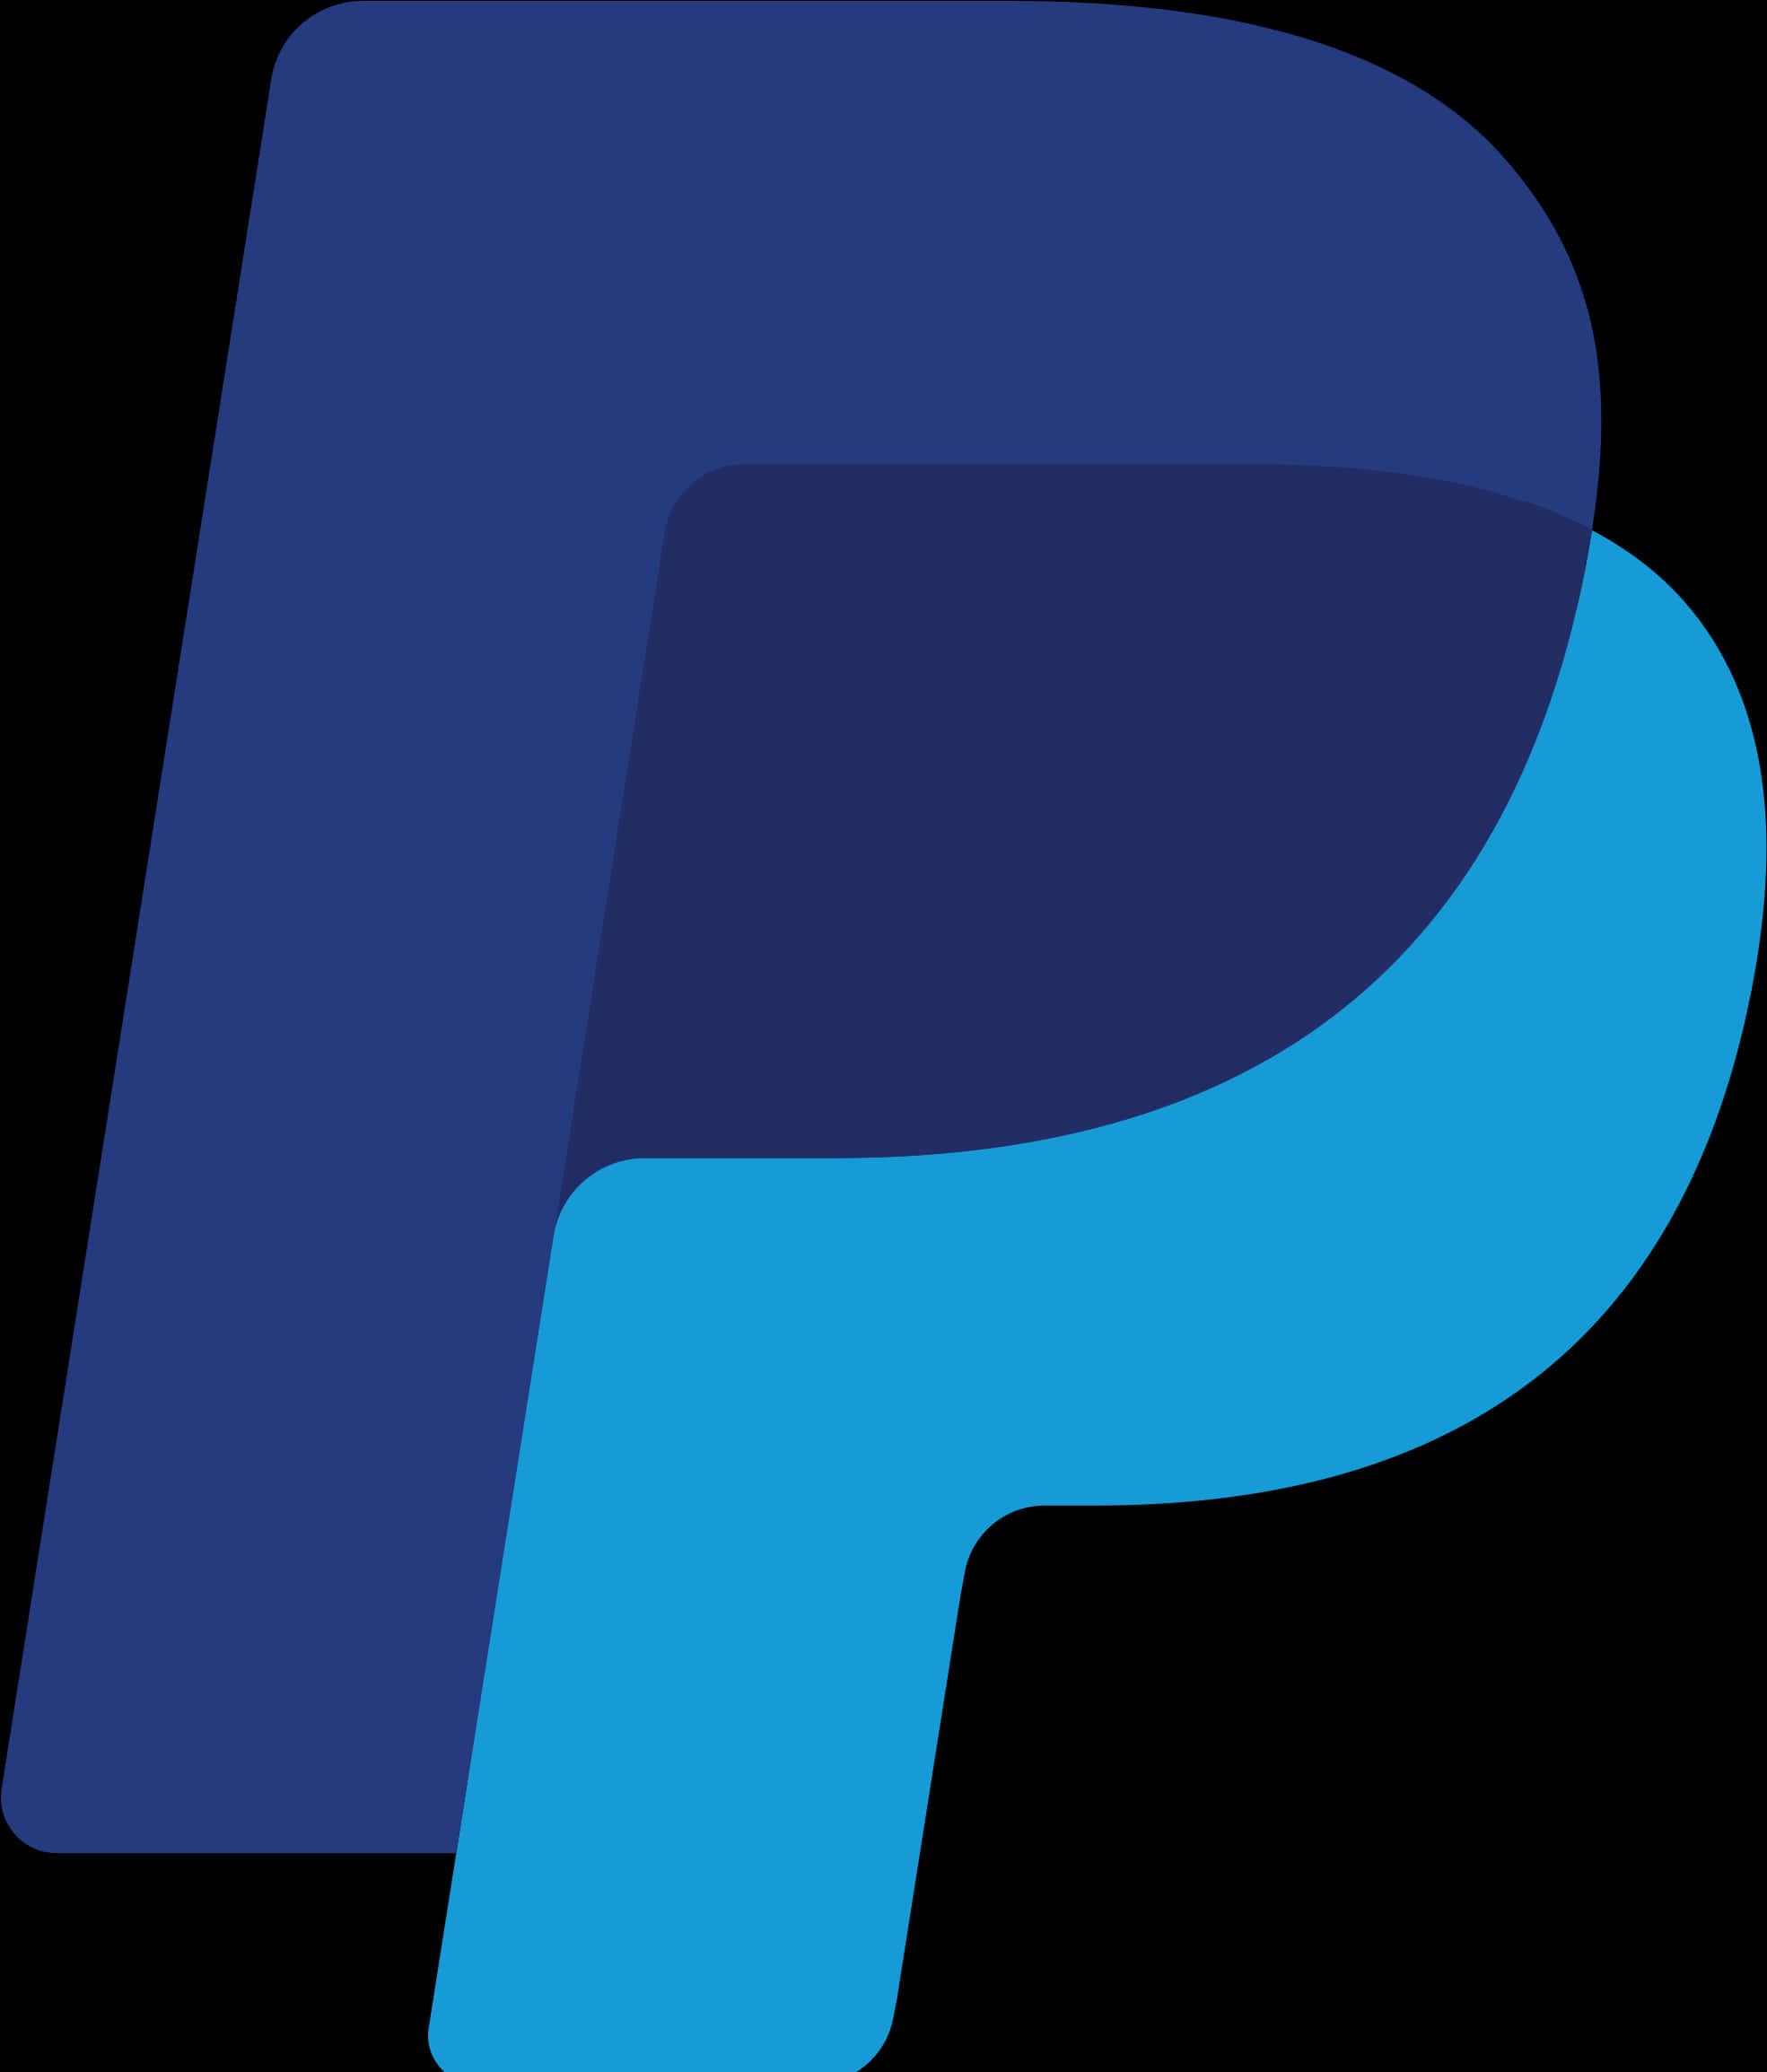 Pay Pal Logo Image